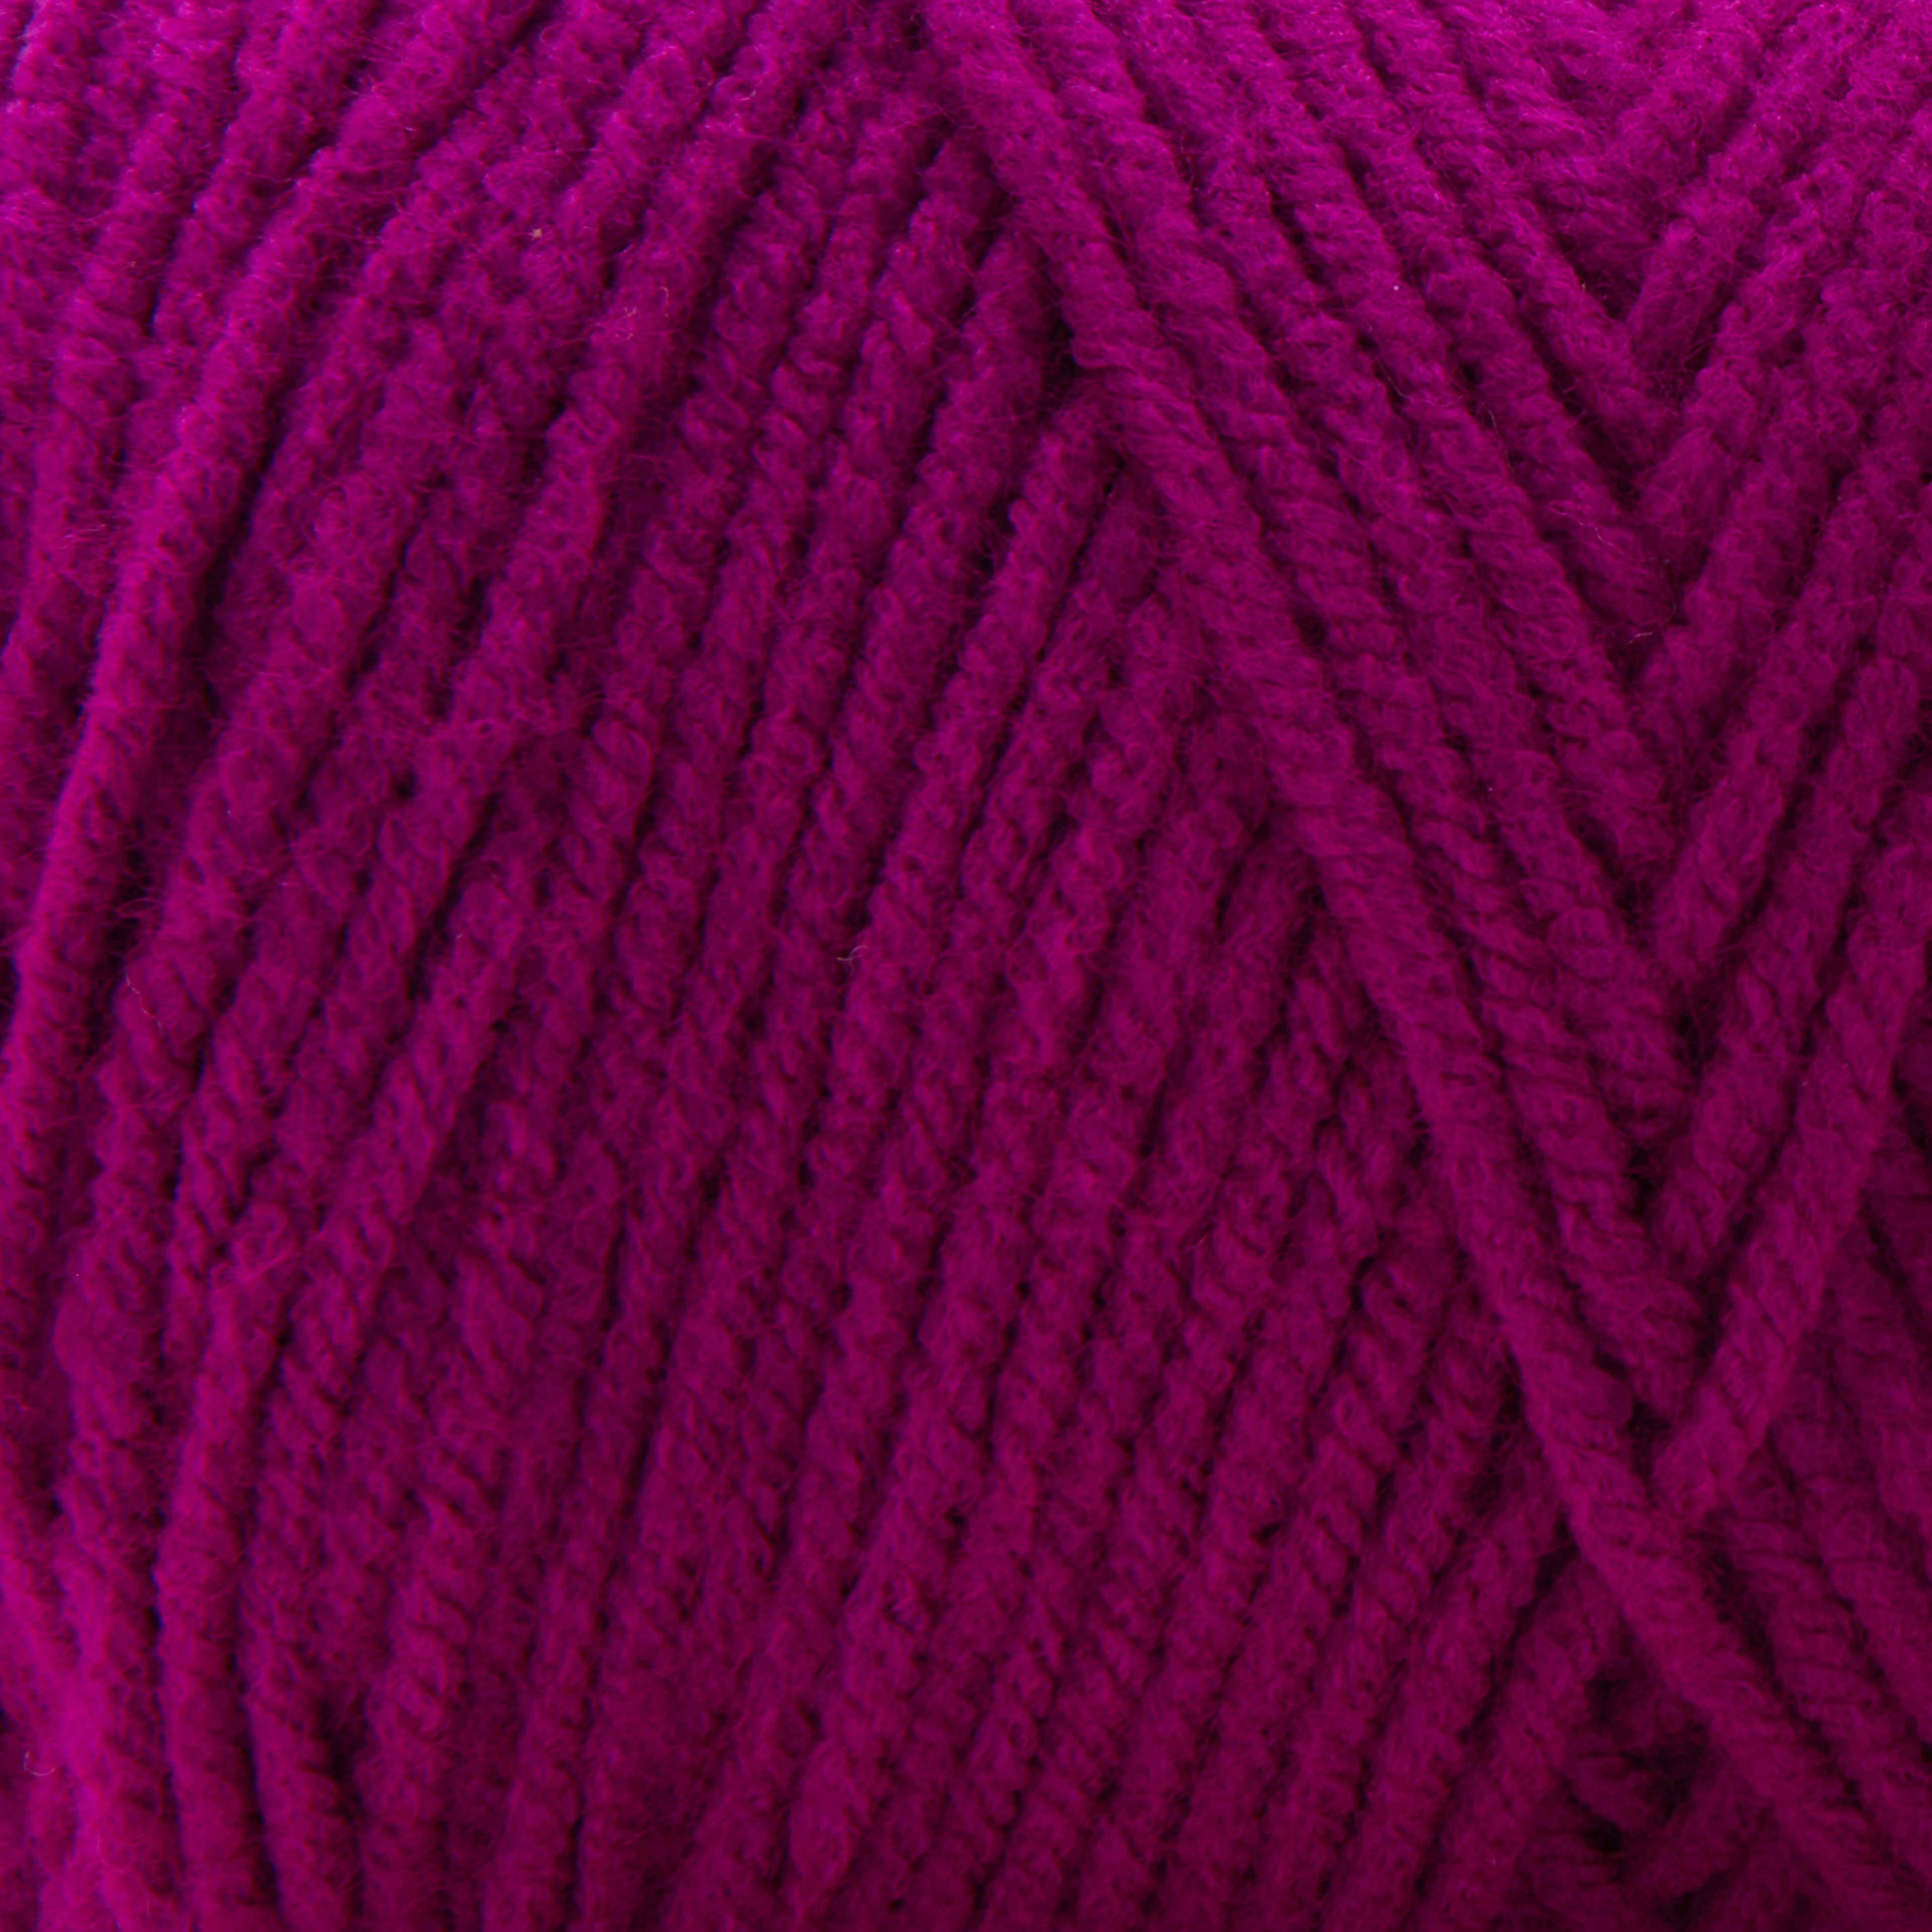 Soft Classic Neon Yarn by Loops & Threads - Neon Yarn for Knitting,  Crochet, Weaving, Arts & Crafts - Neon Orange, Bulk 12 Pack